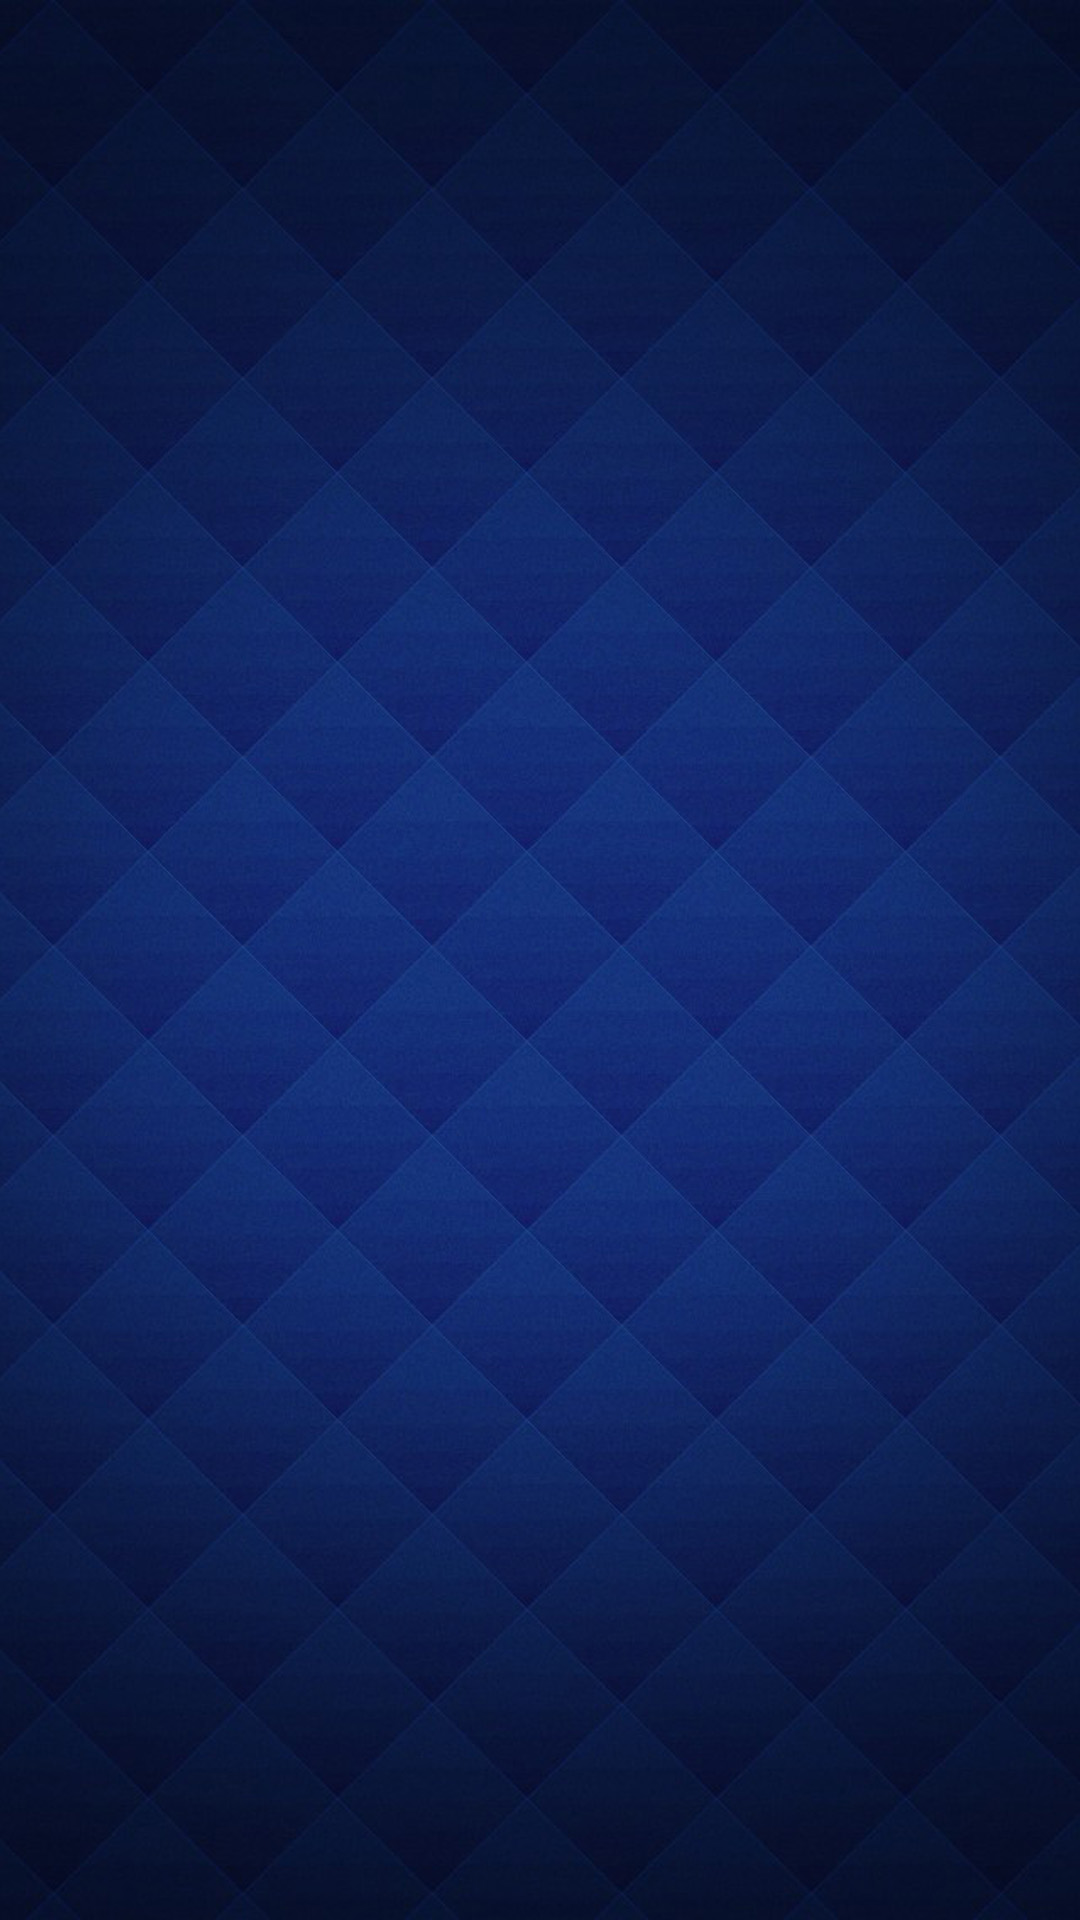 Blue iPhone Wallpapers | PixelsTalk.Net